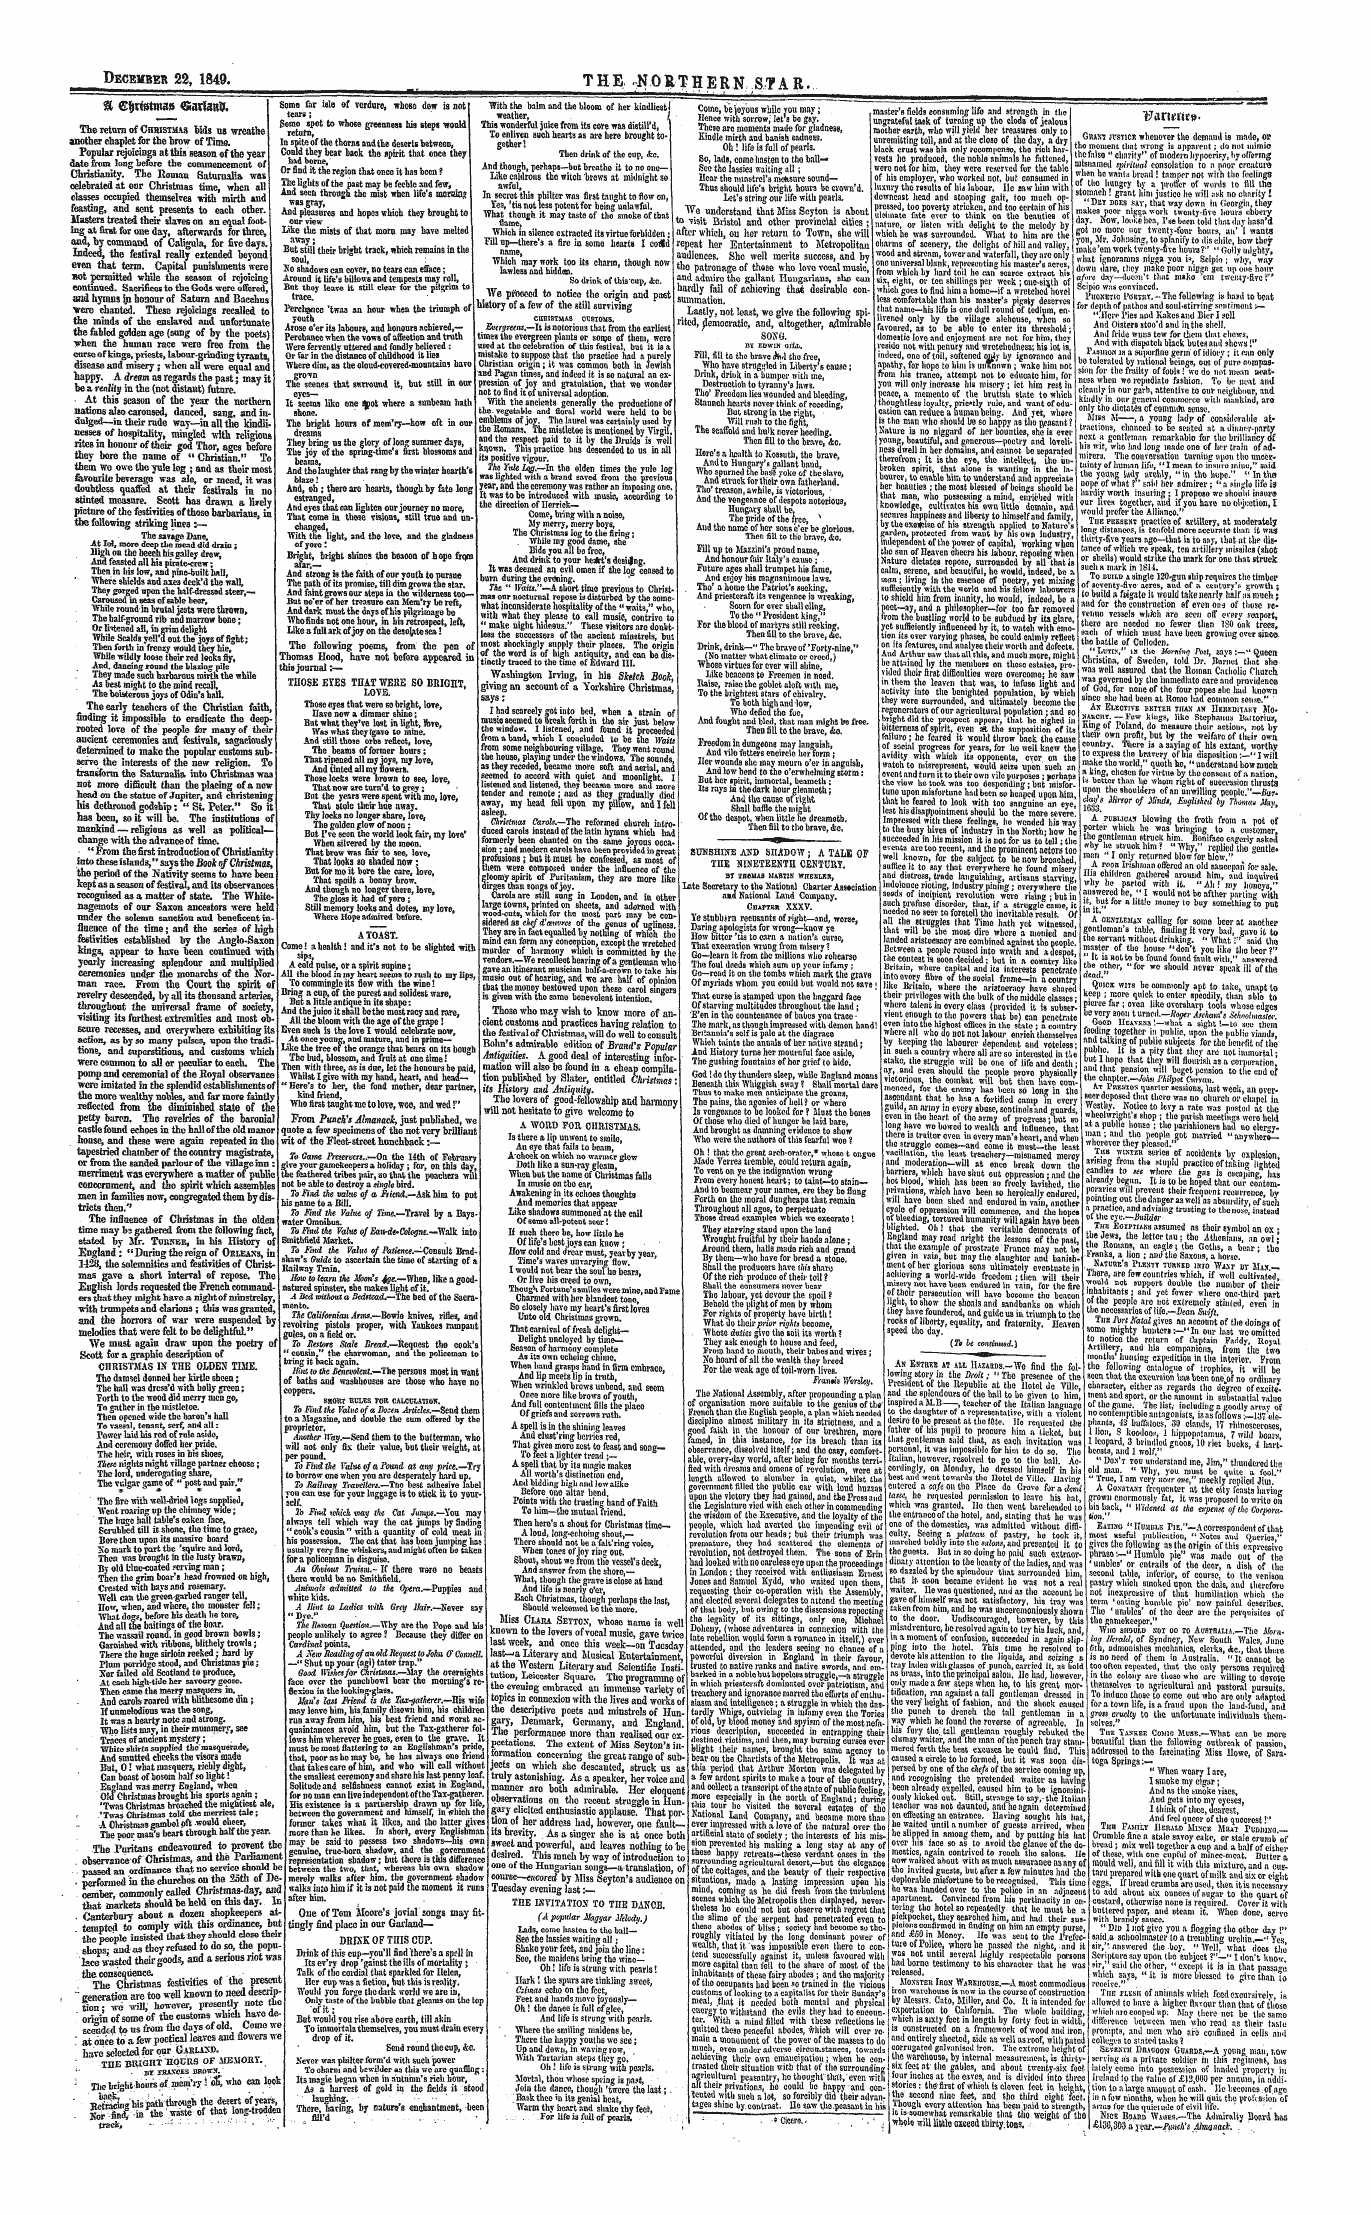 Northern Star (1837-1852): jS F Y, 1st edition - V&Tmuv.